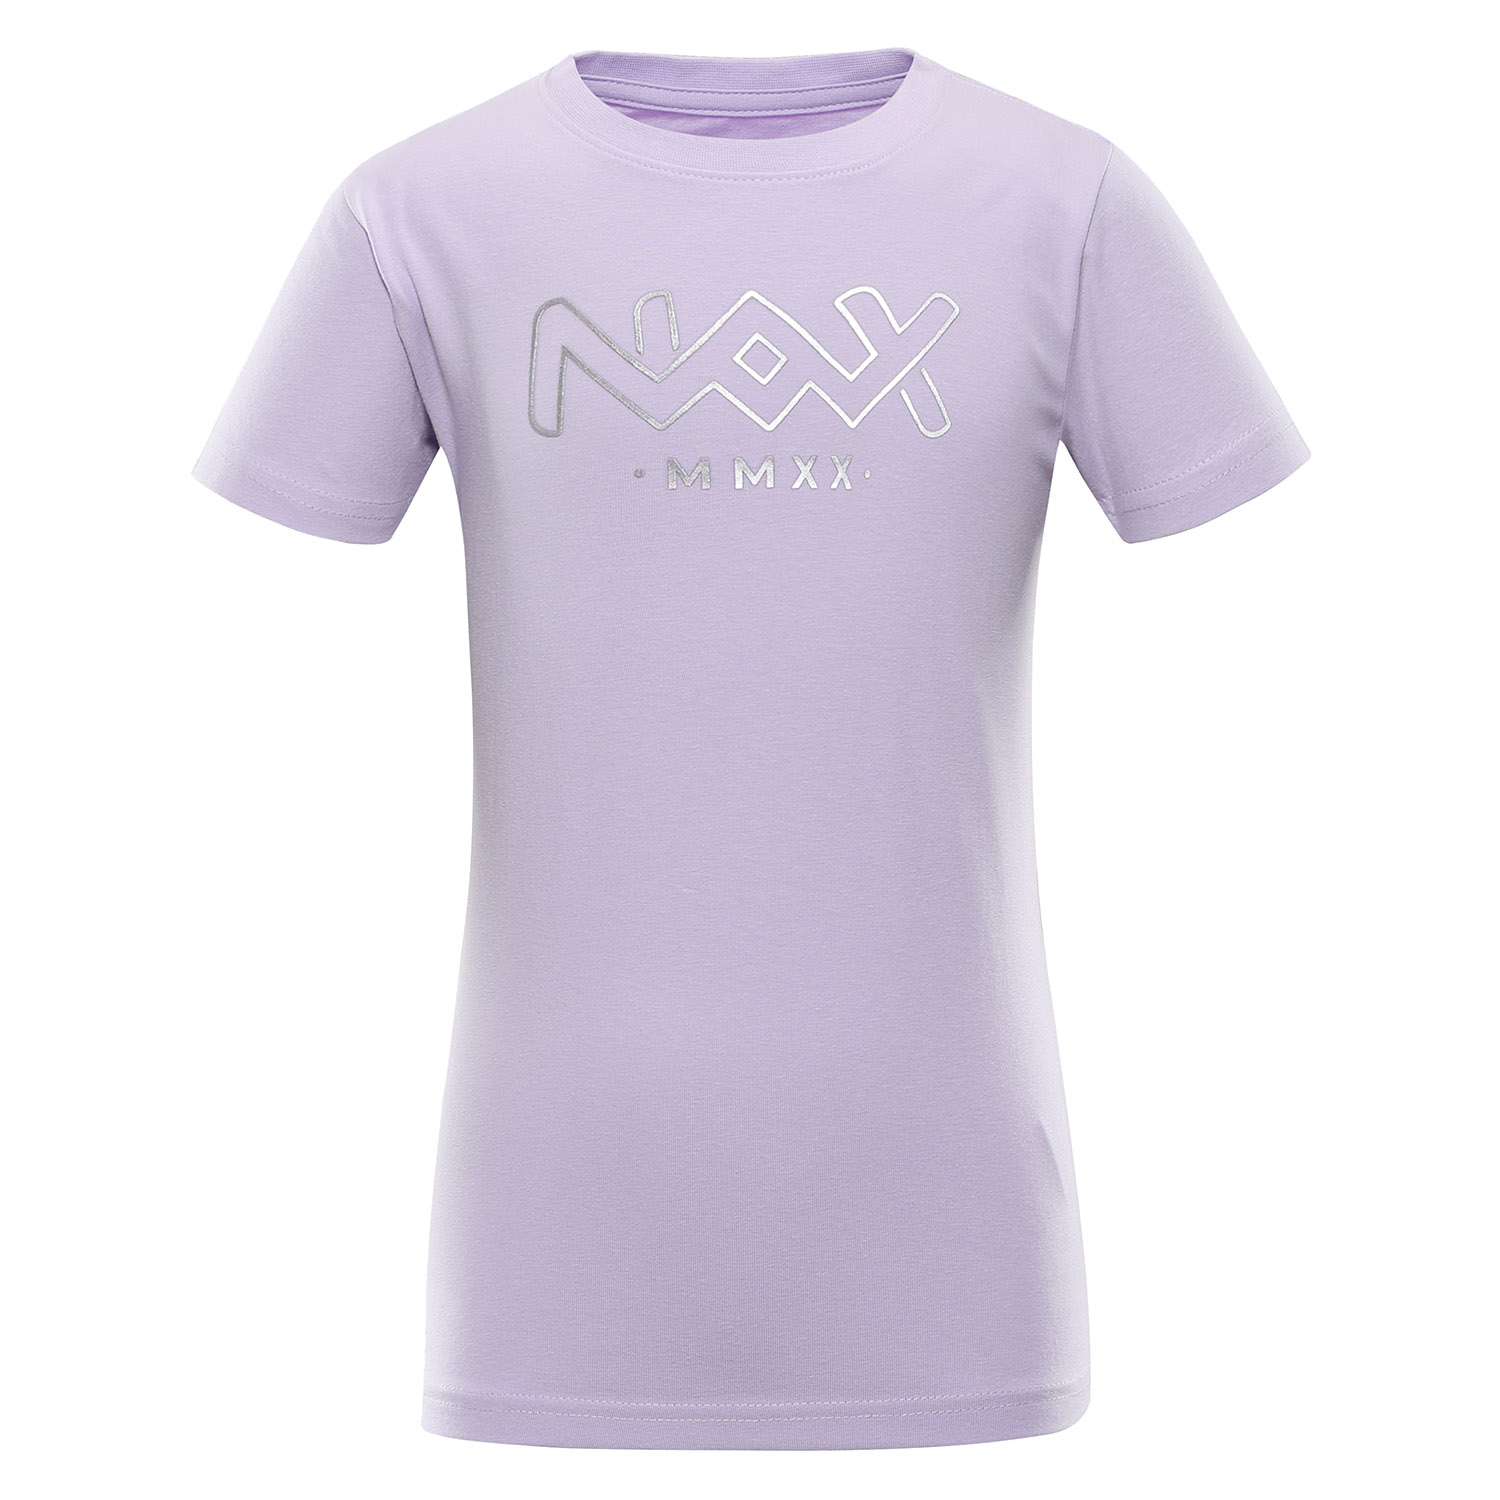 Kids T-shirt nax NAX UKESO pastel lilac